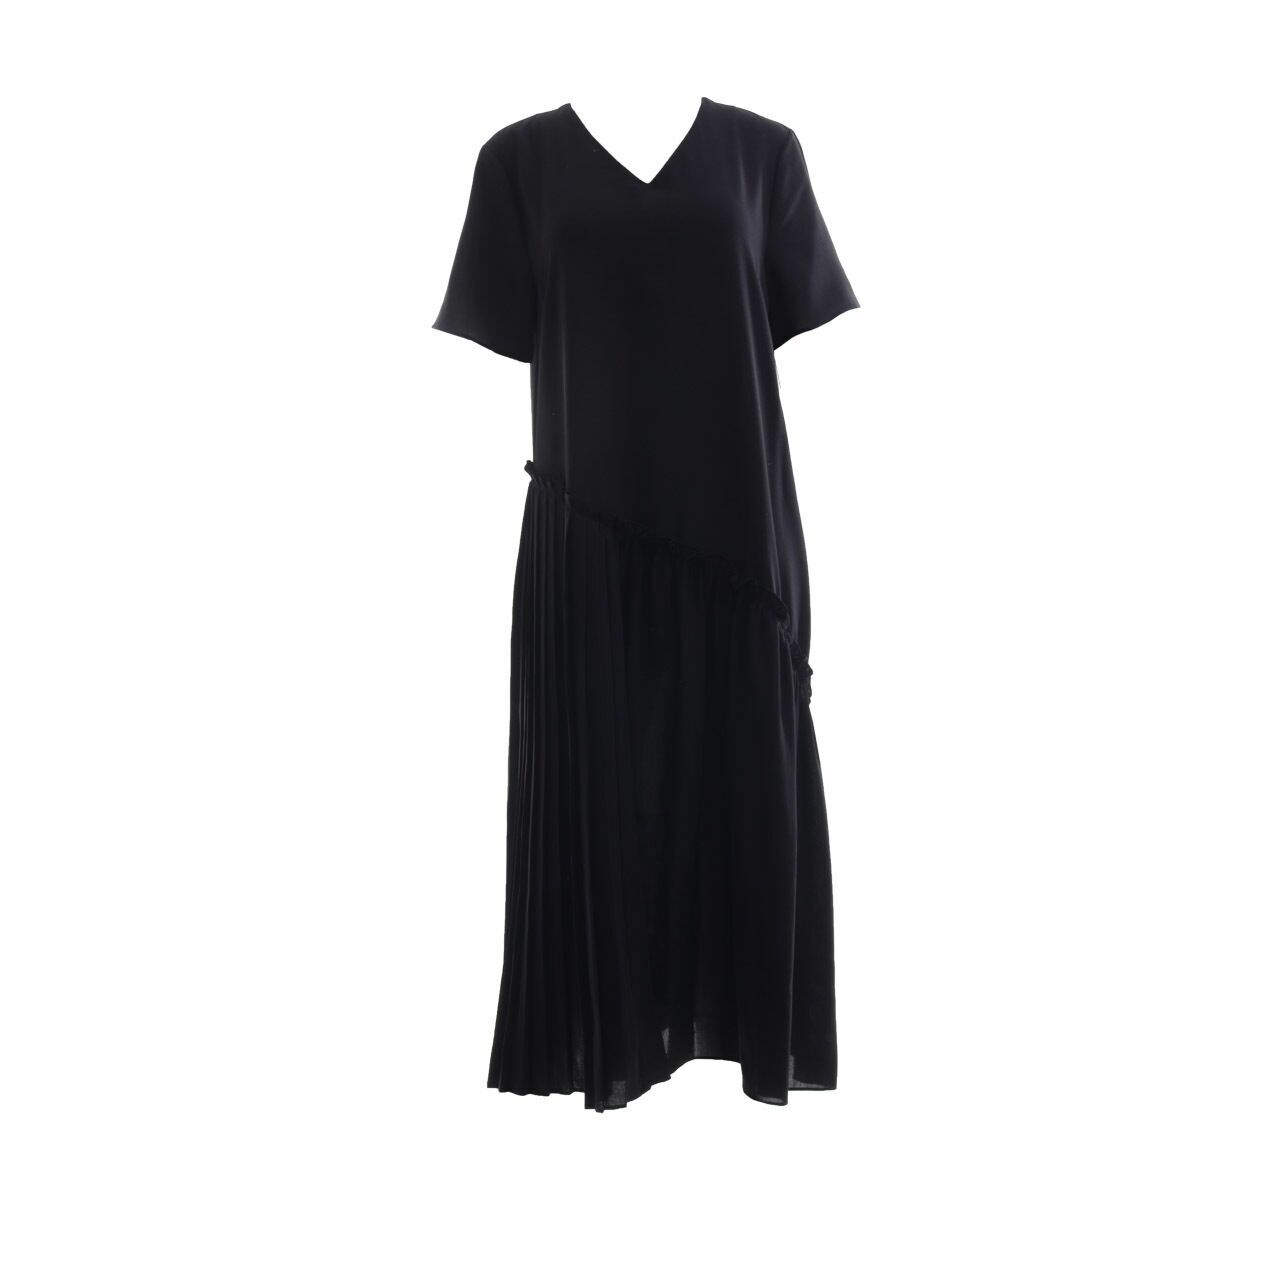 Amavee Official Black Midi Dress